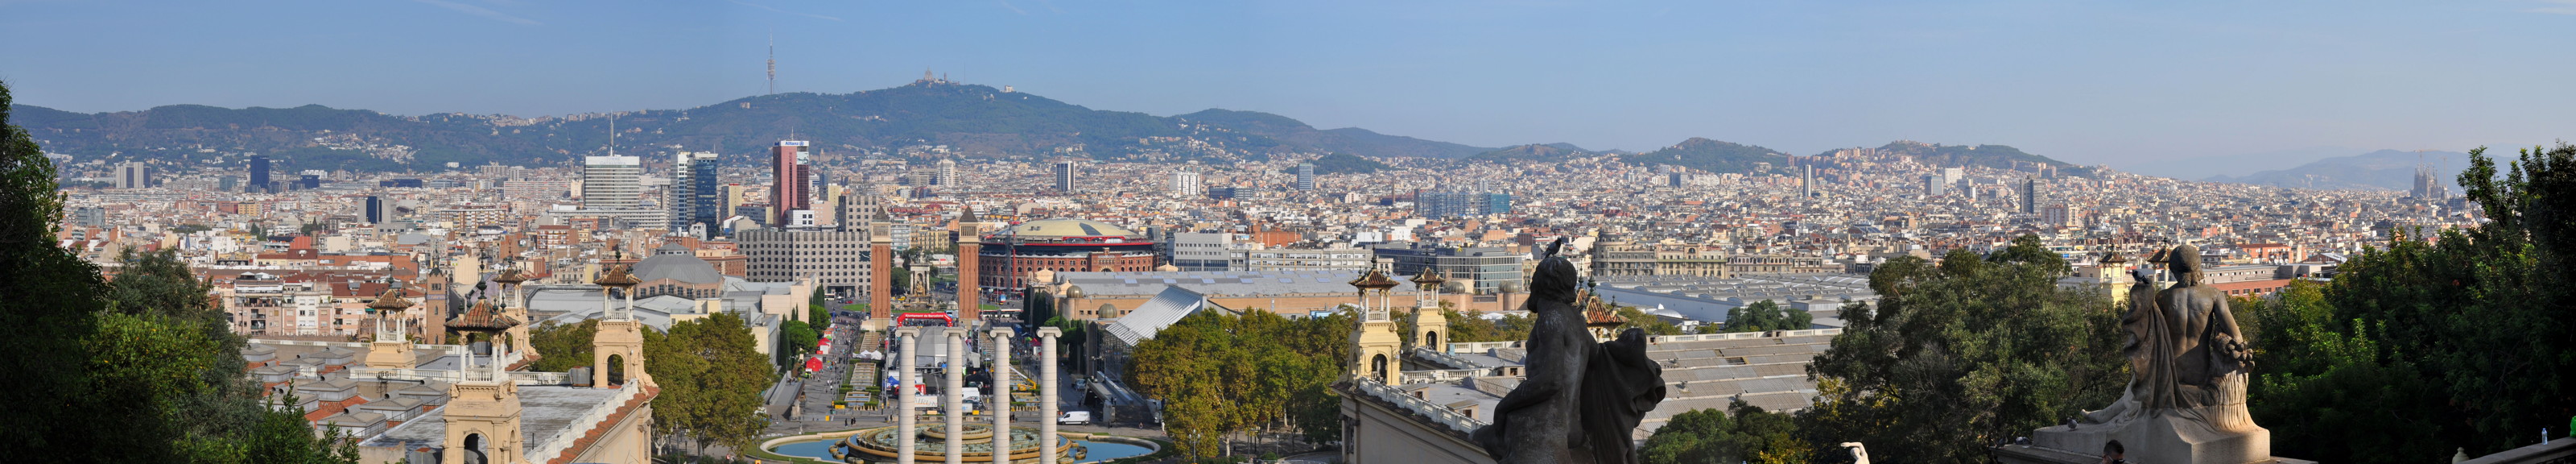 Panorama depuis la terrasse du palais national